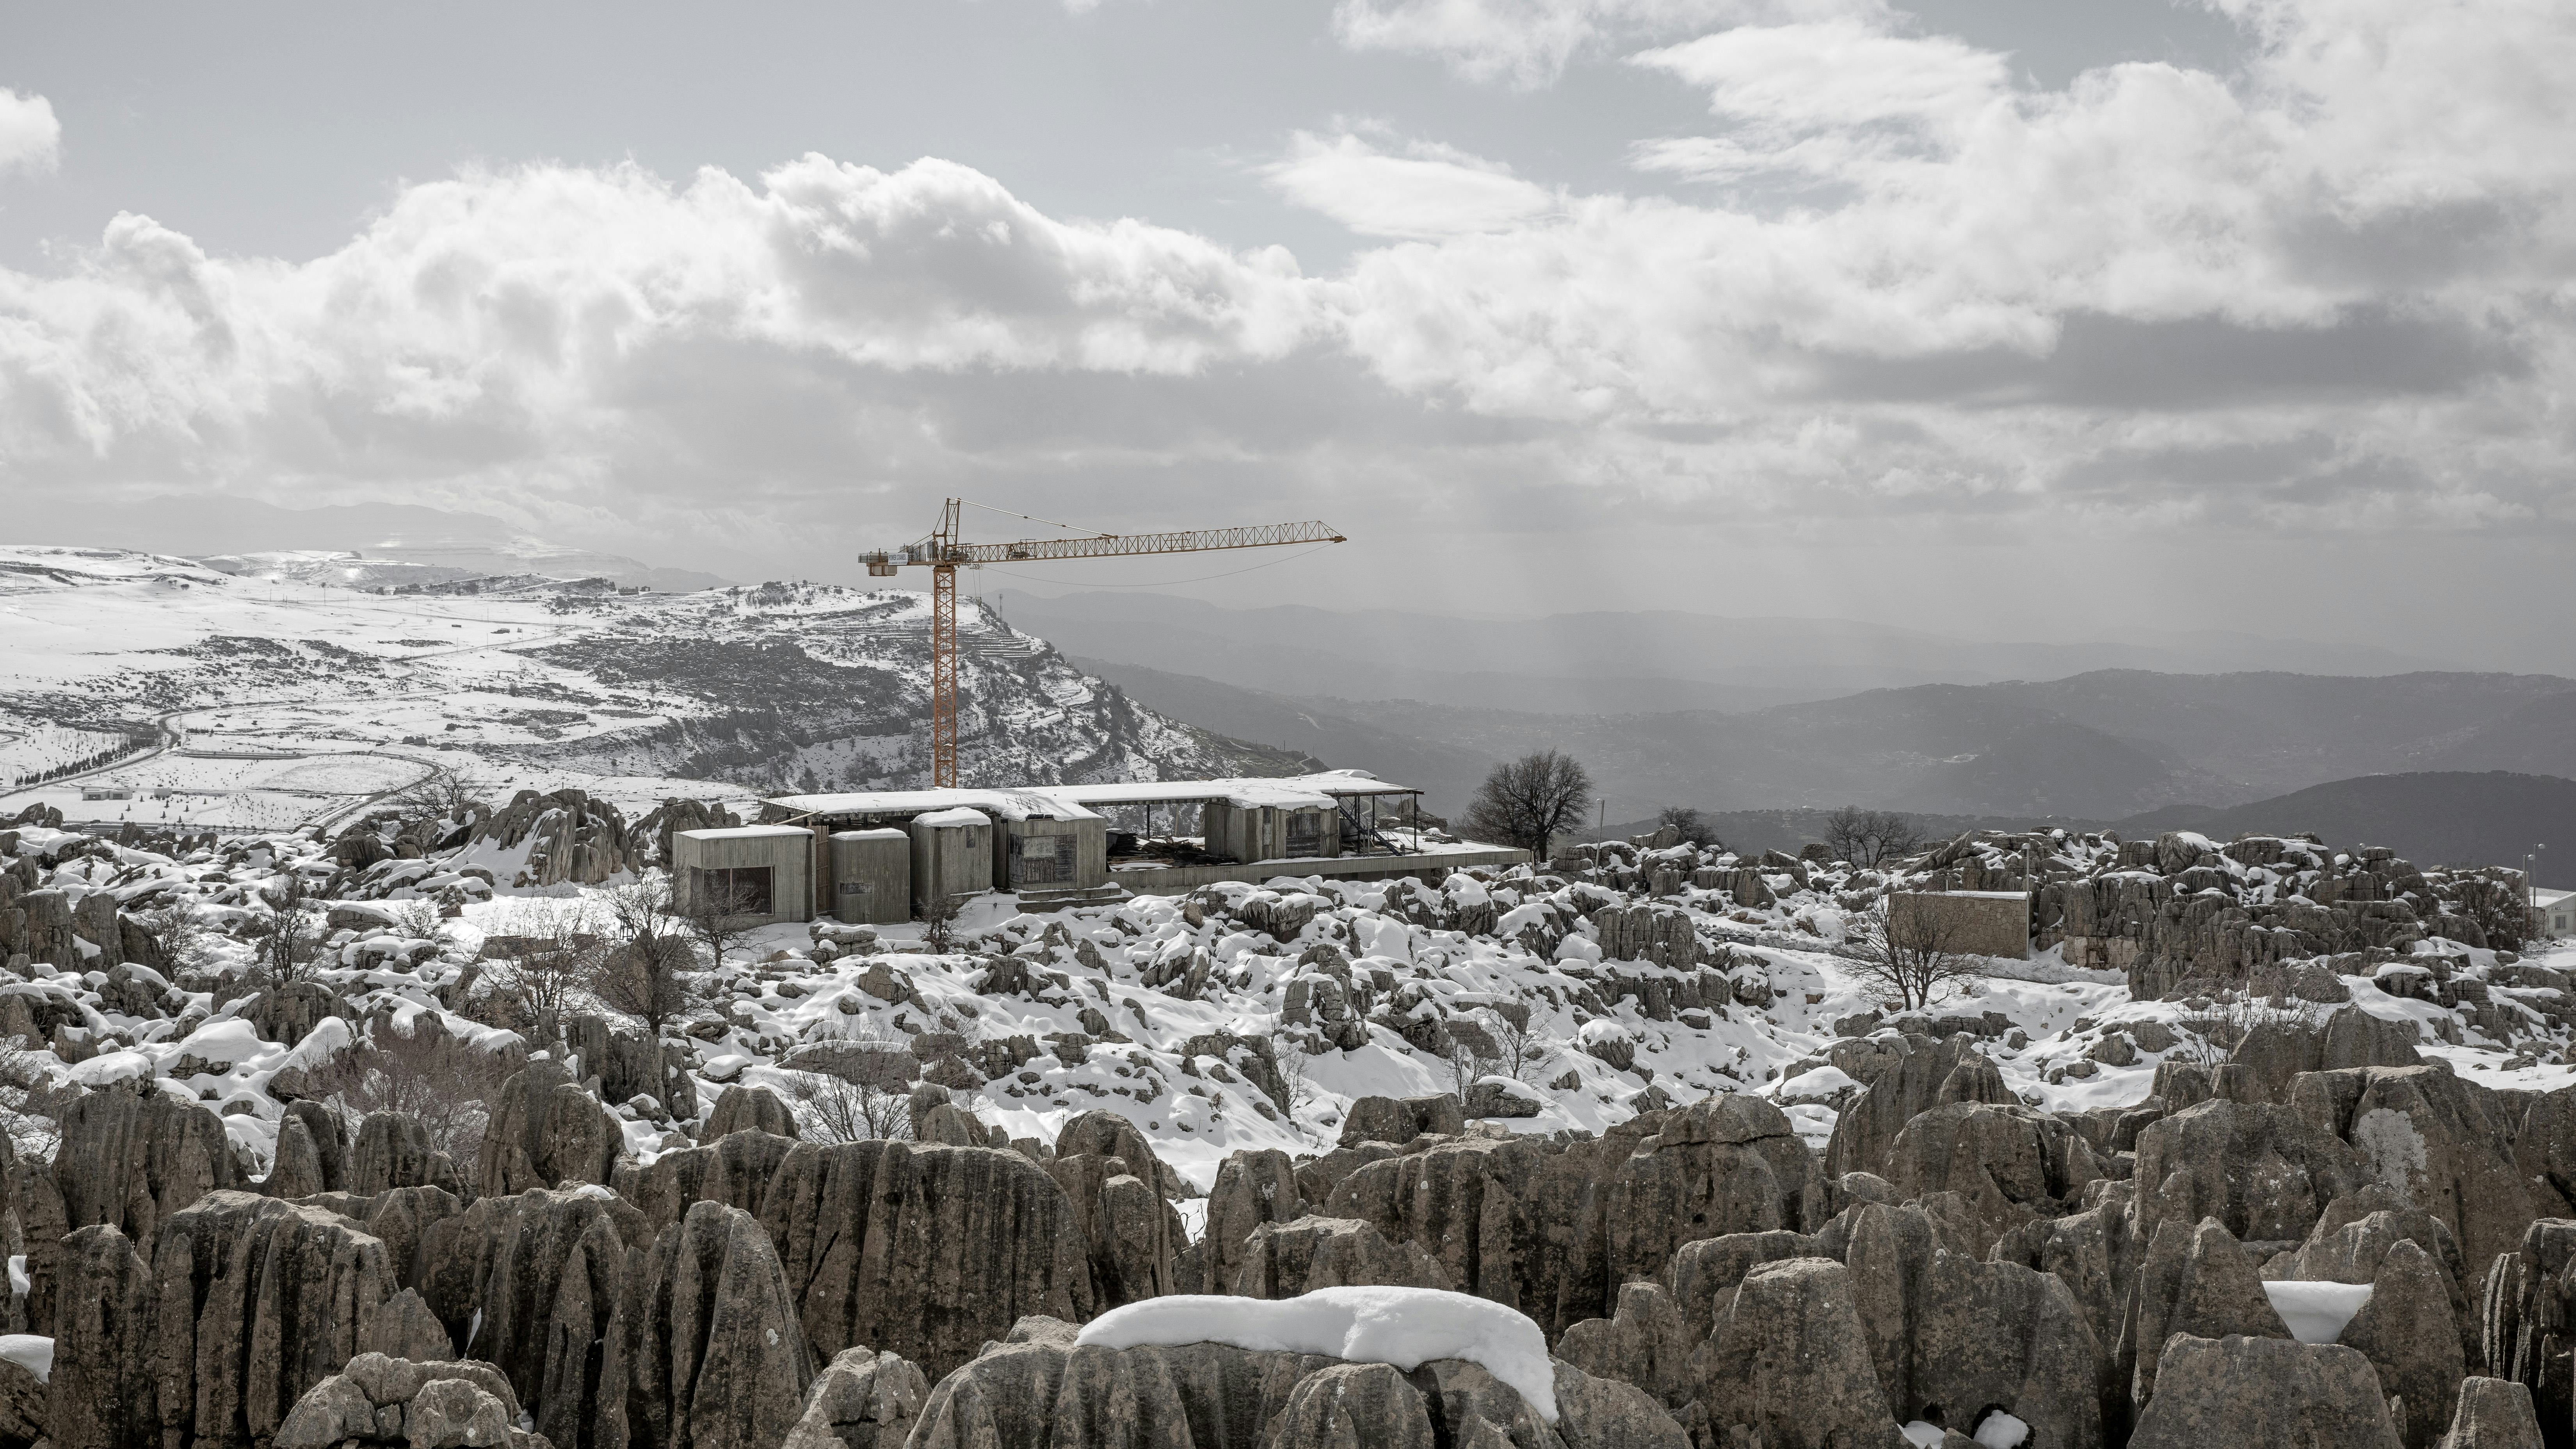 Constructie Libanese villa On The Rocks door Karim Nader